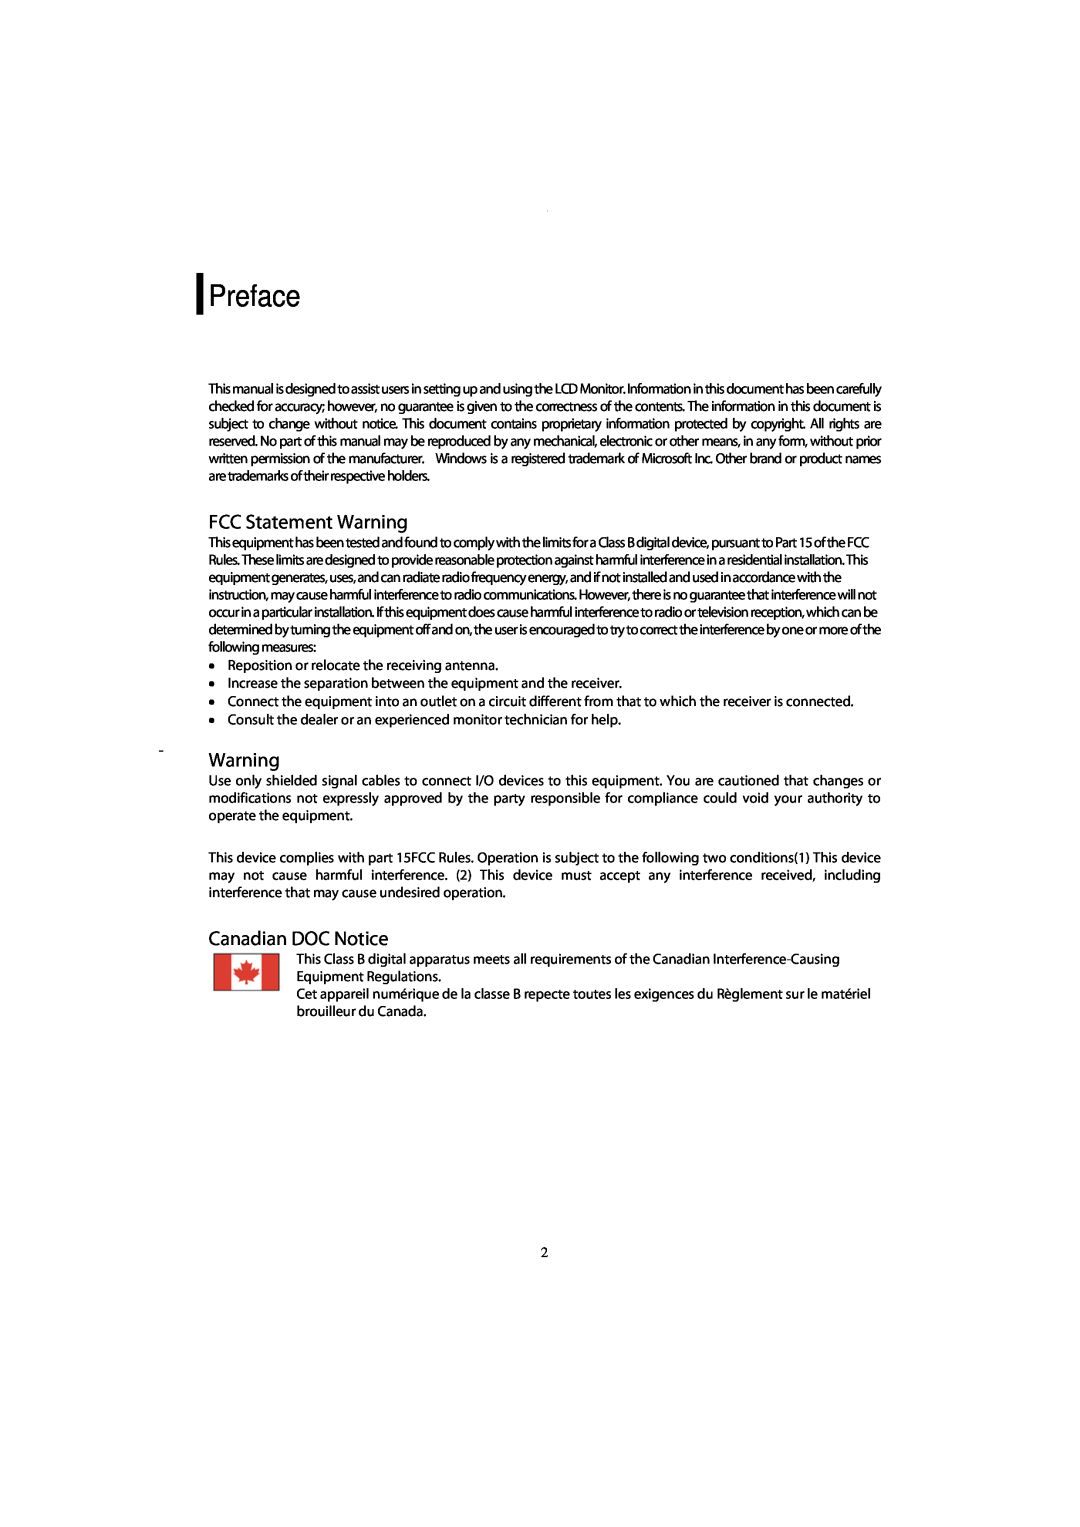 Planar PL1911M manual Preface, FCC Statement Warning, Canadian DOC Notice 